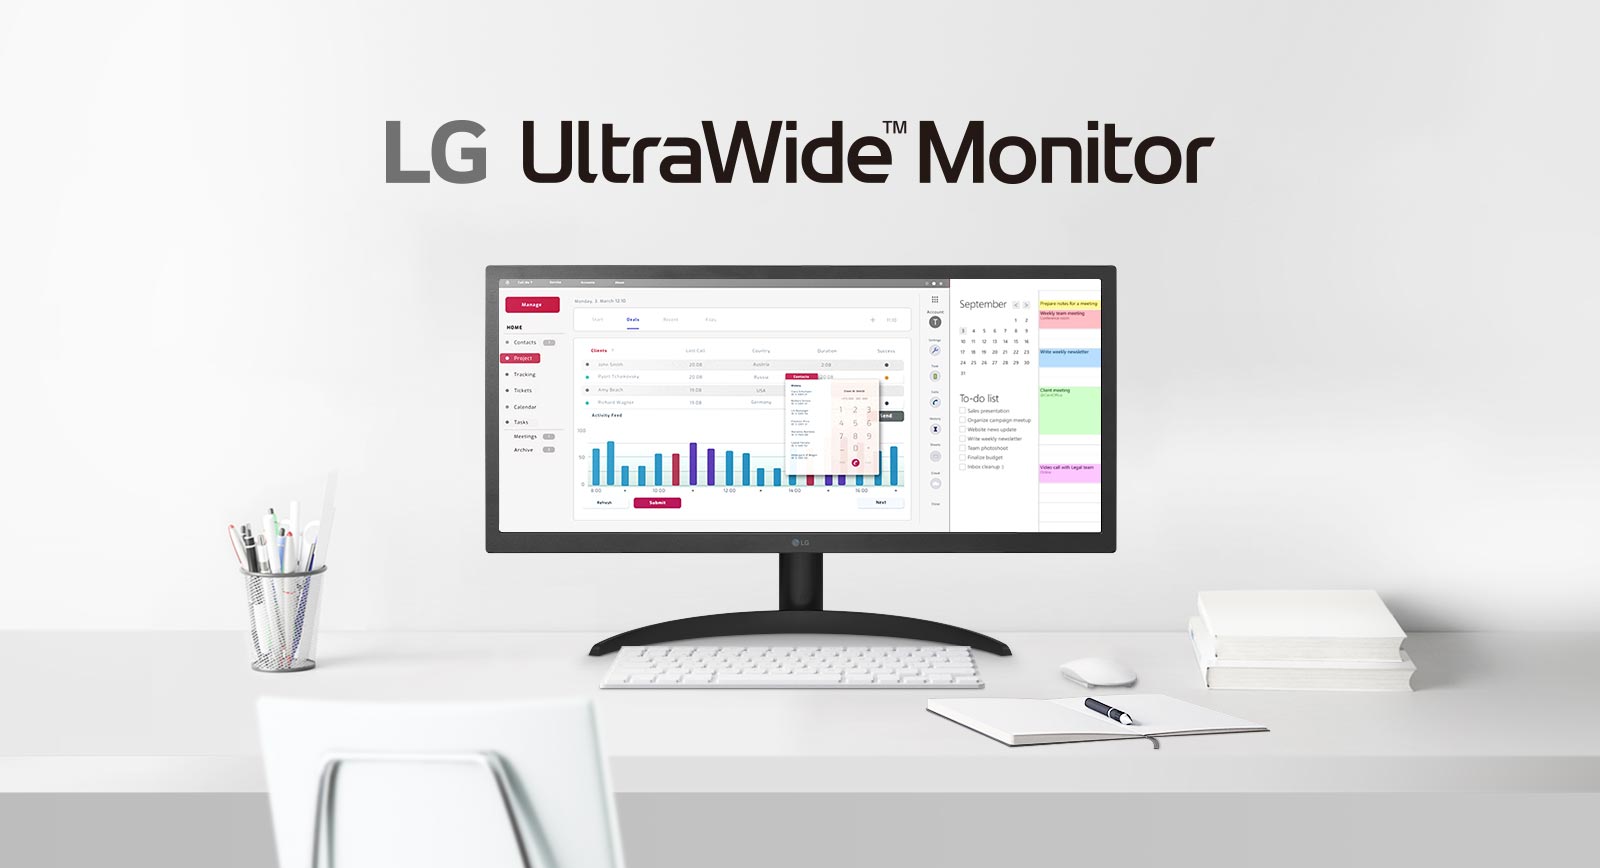 mnt-ultrawide-26wq500-01-lg-ultrawide-monitor-desktop